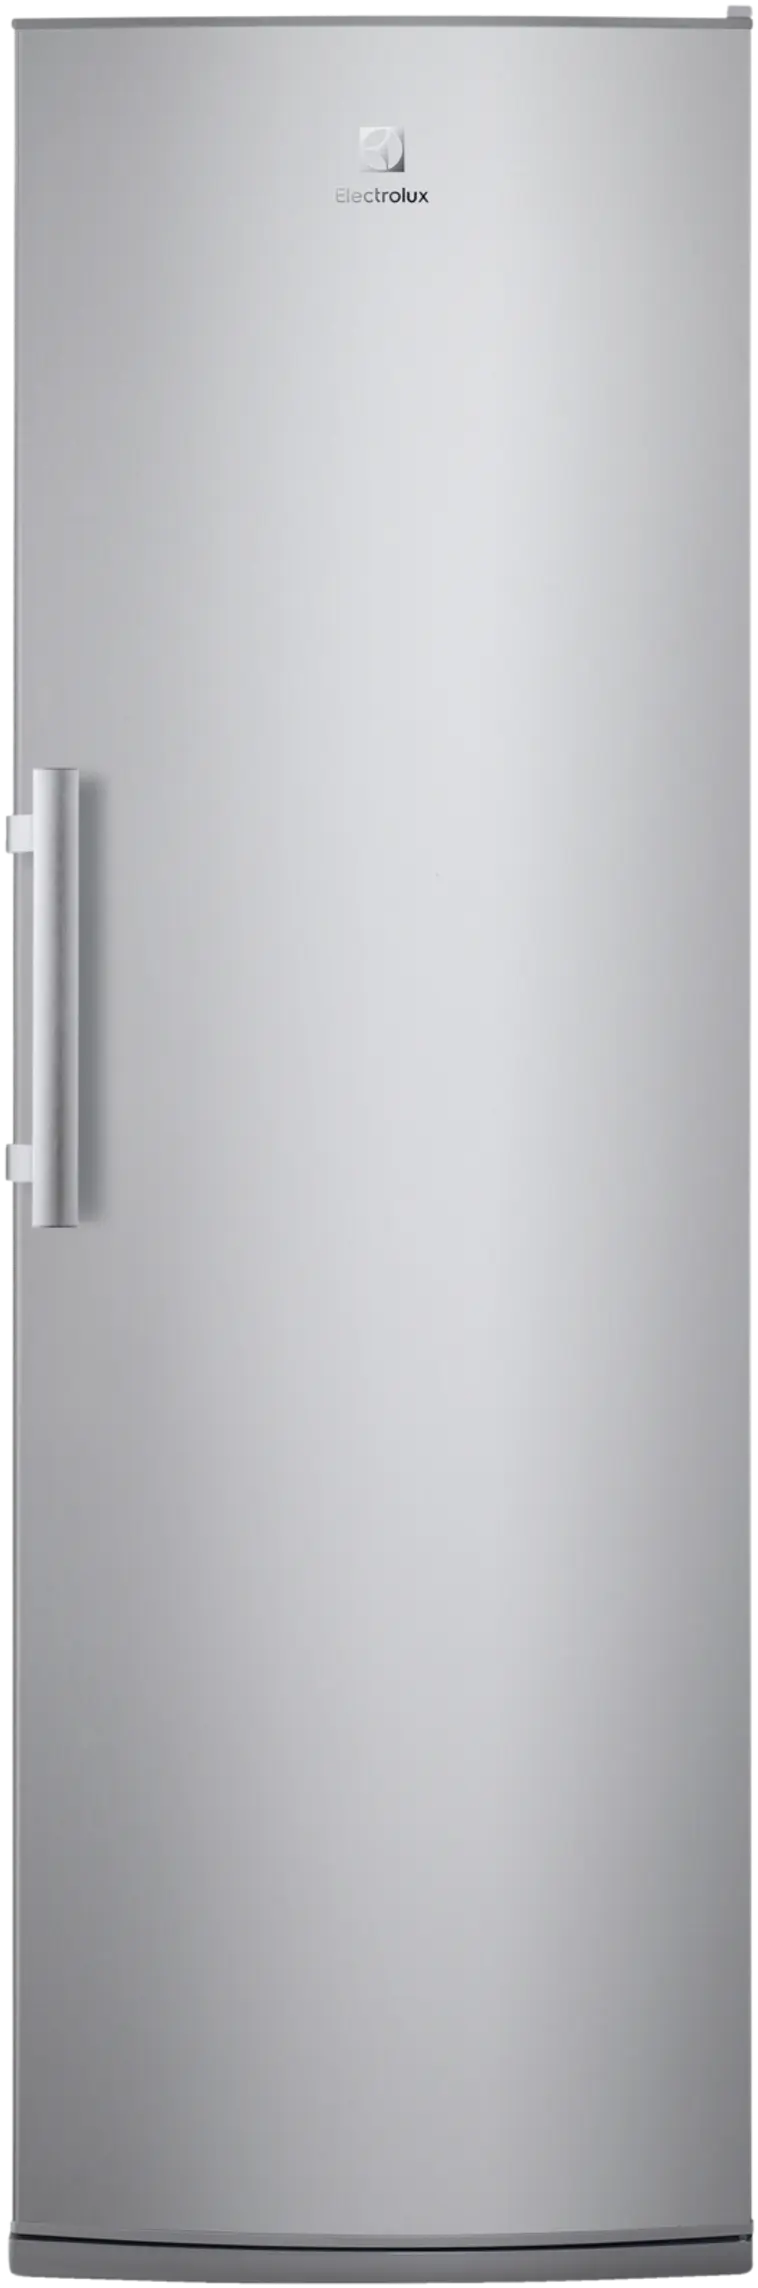 Electrolux jääkaappi LRS2DE39X teräs